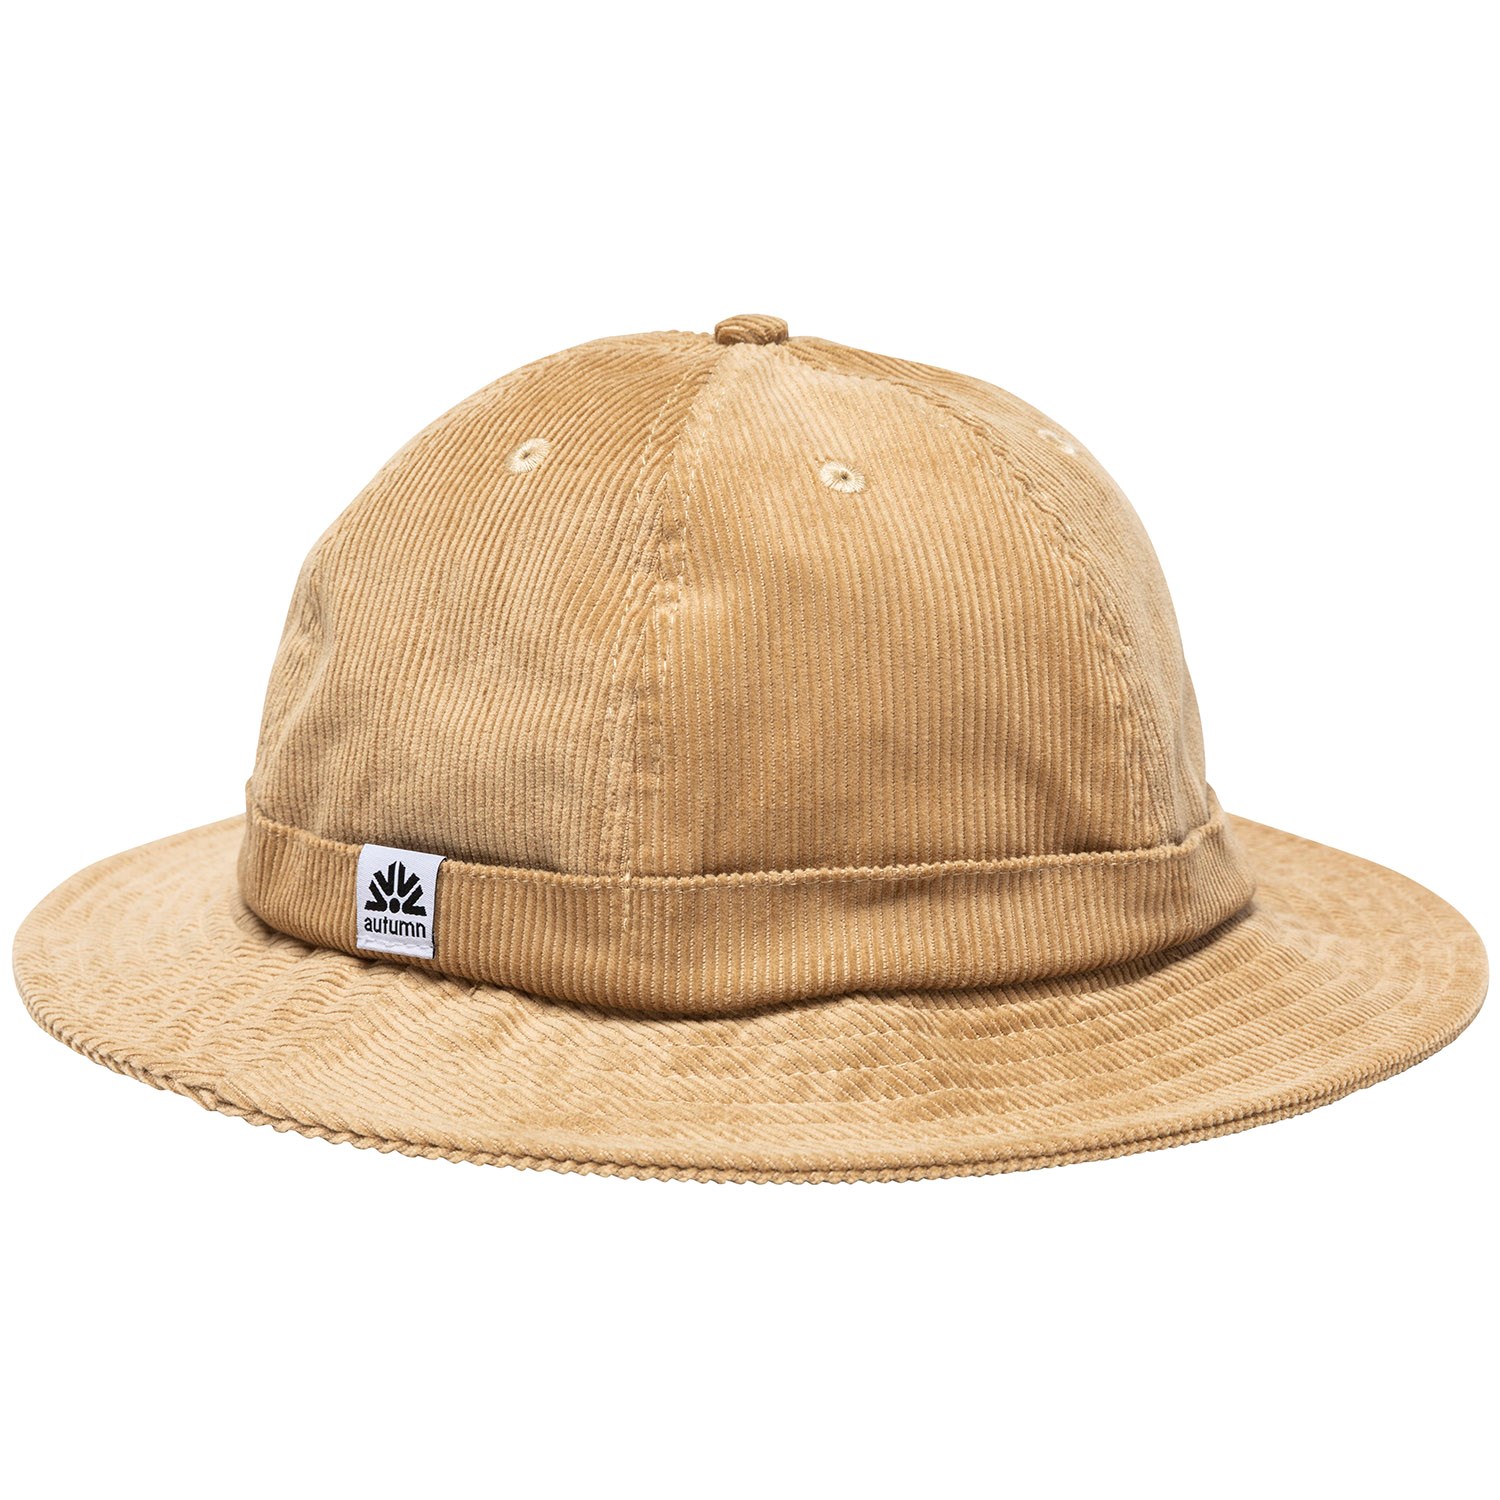 Шляпа Autumn, хаки 2021 double sided wear embroidery panama bucket hat men women summer bucket cap hip hop hat fisherman hat